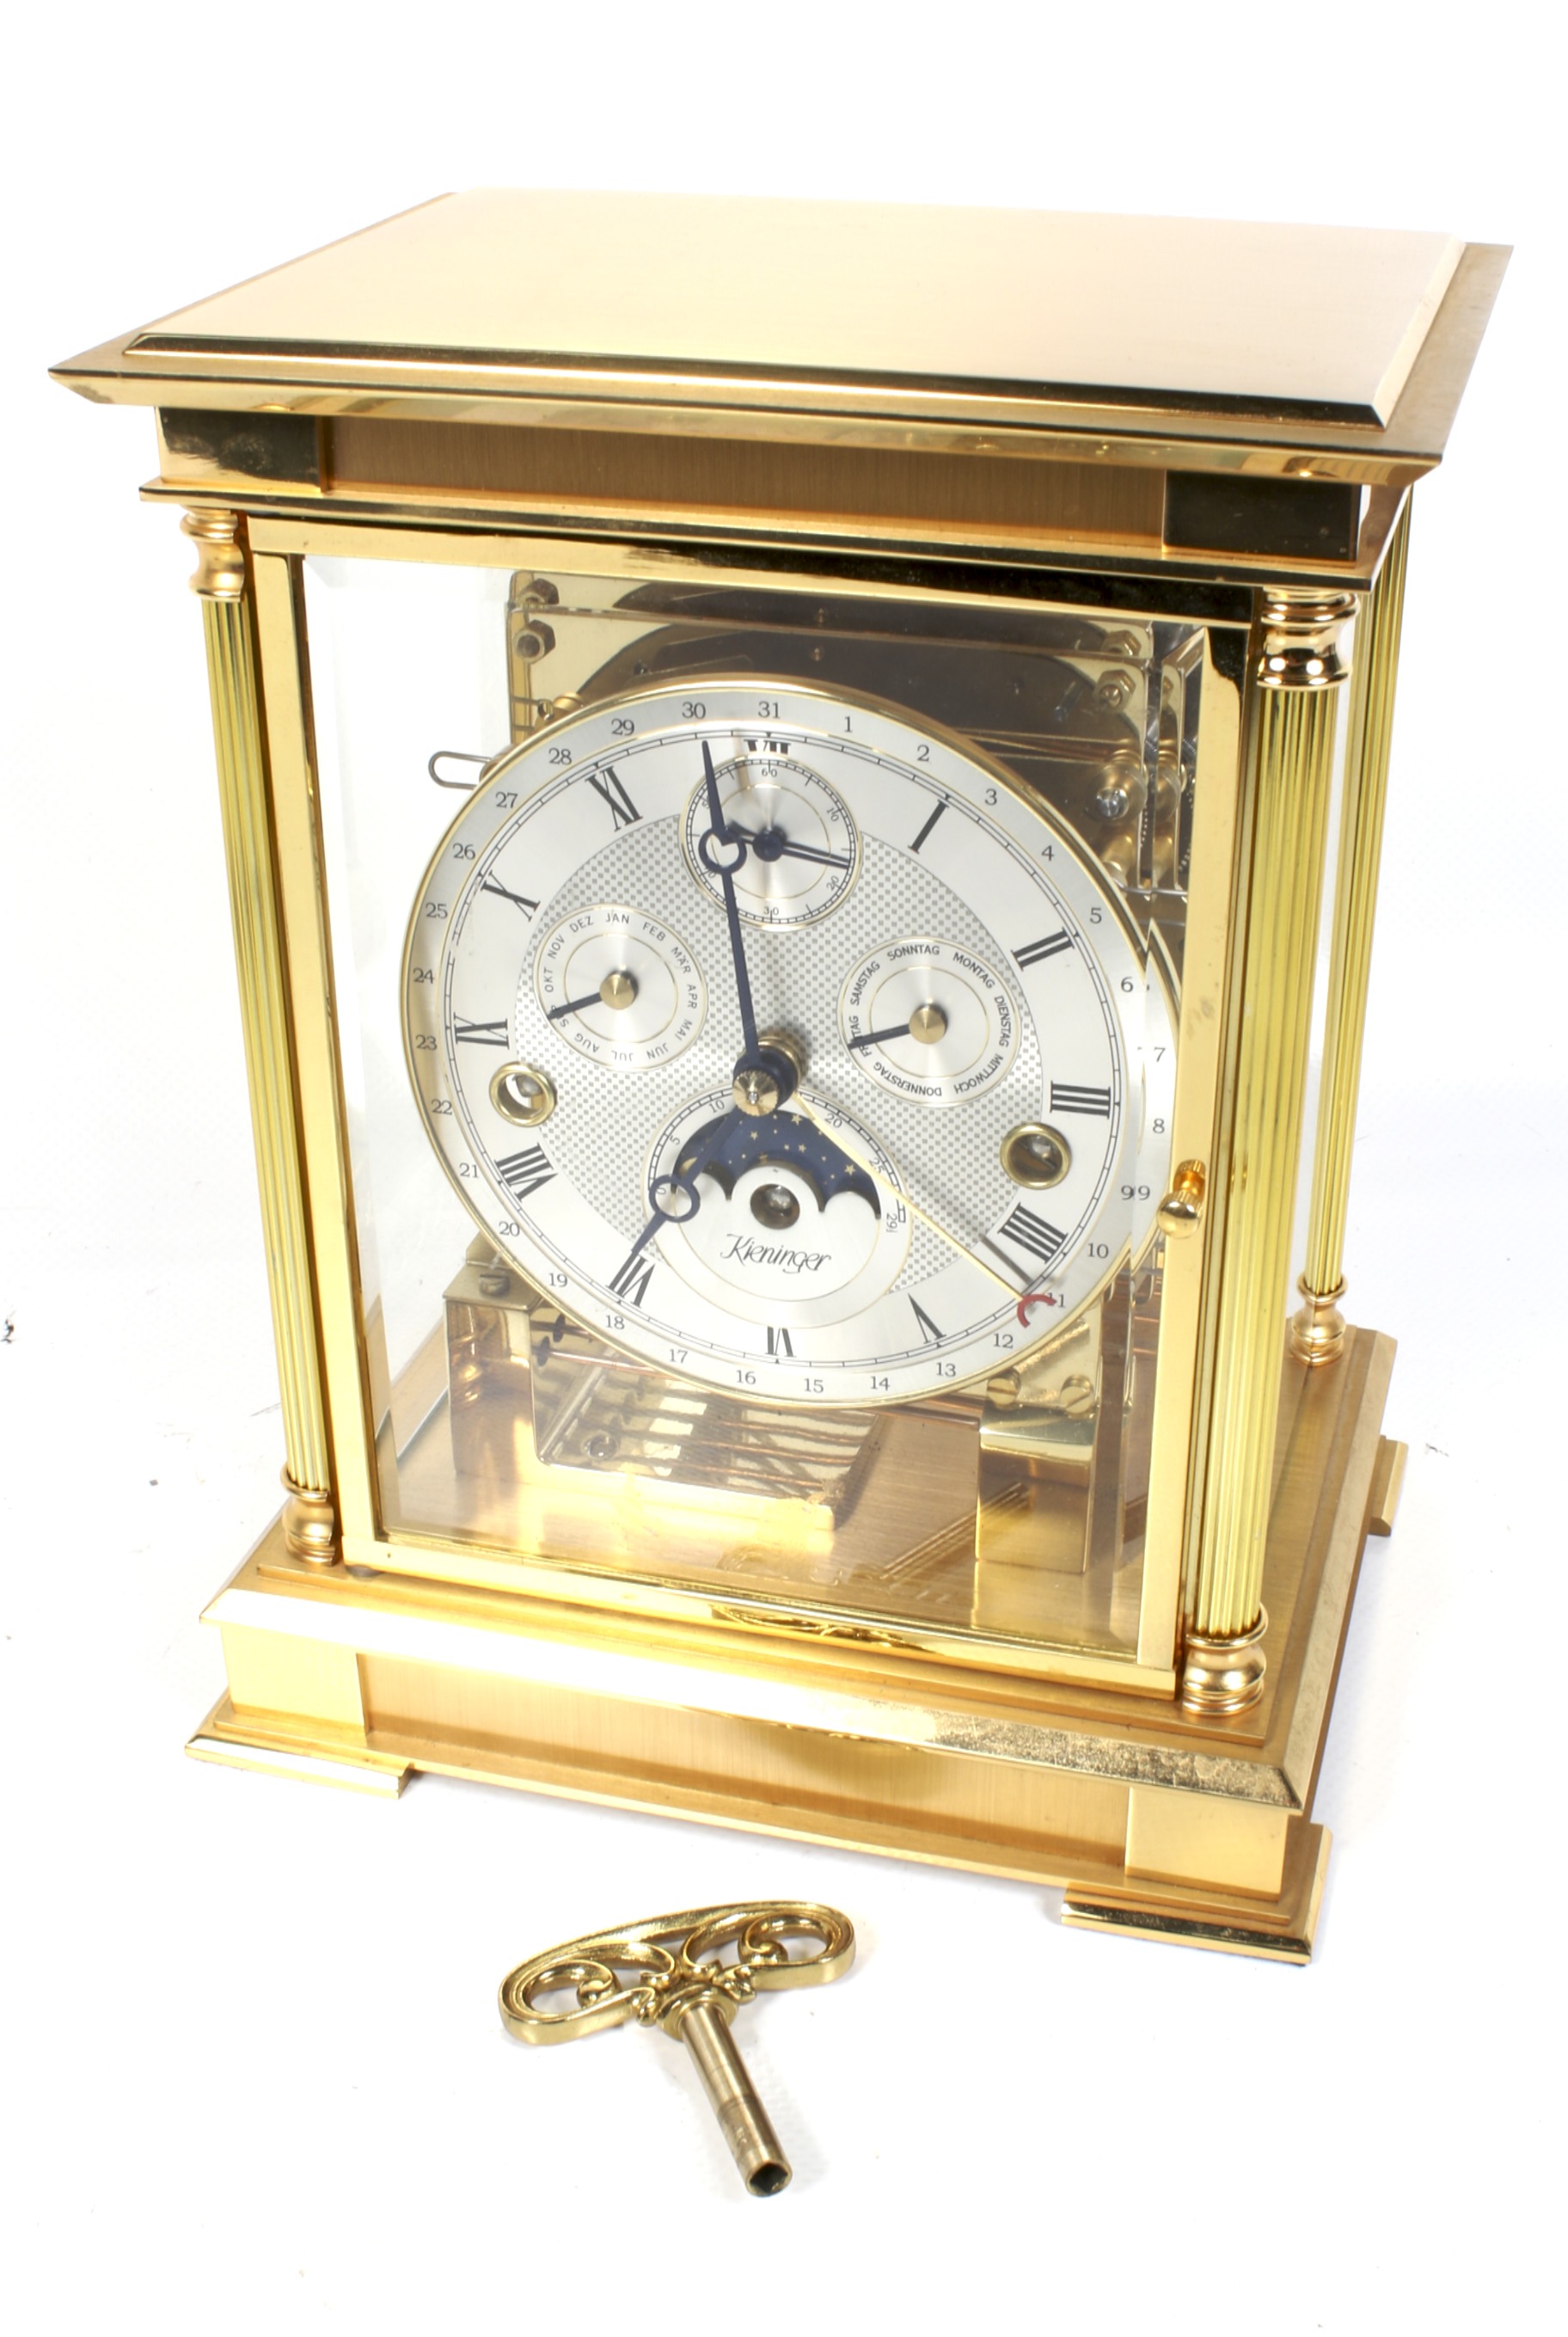 A Kieniger brass chiming mantel clock. - Image 4 of 6